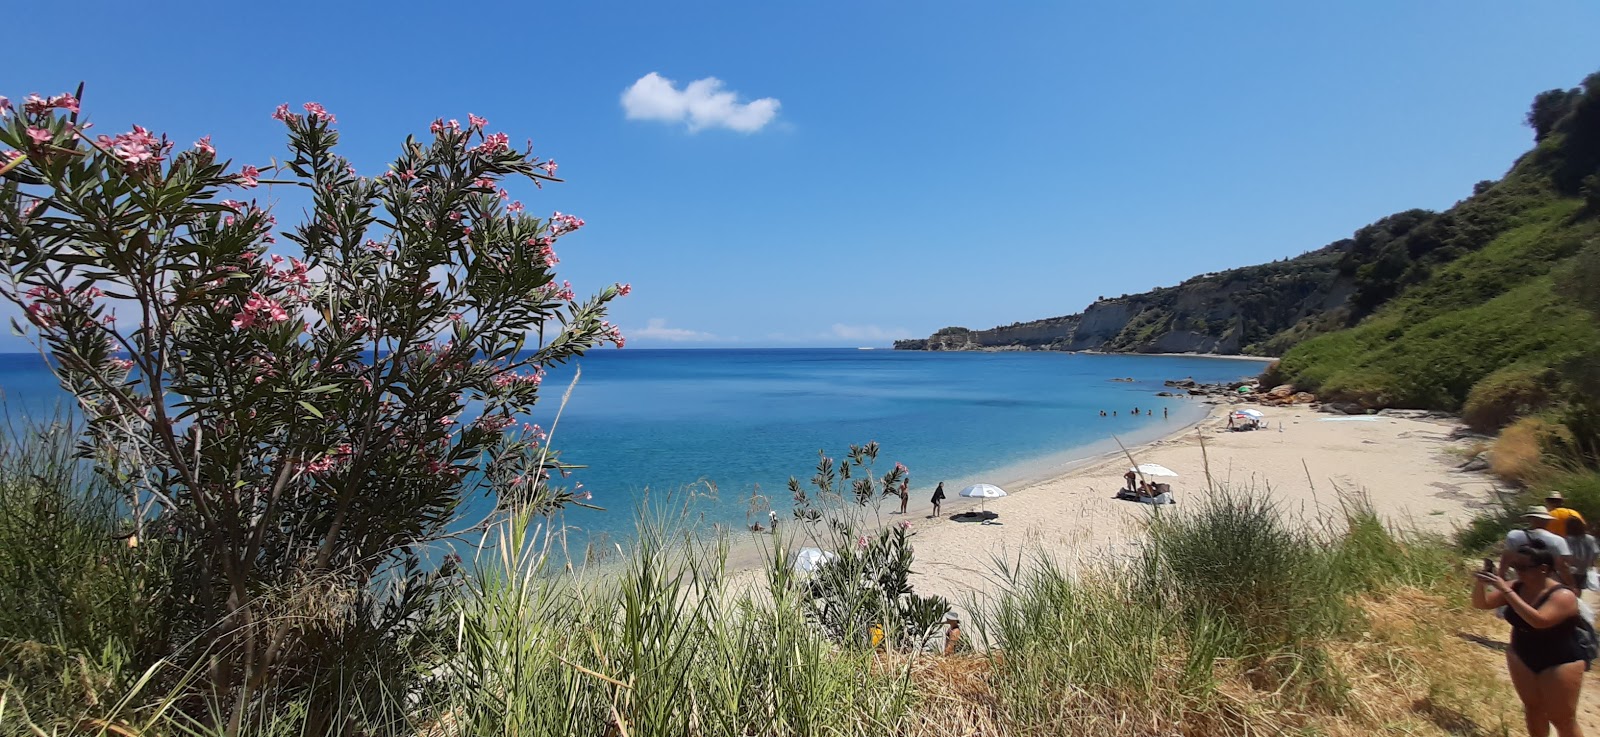 Foto af Agia Triada beach vildt område